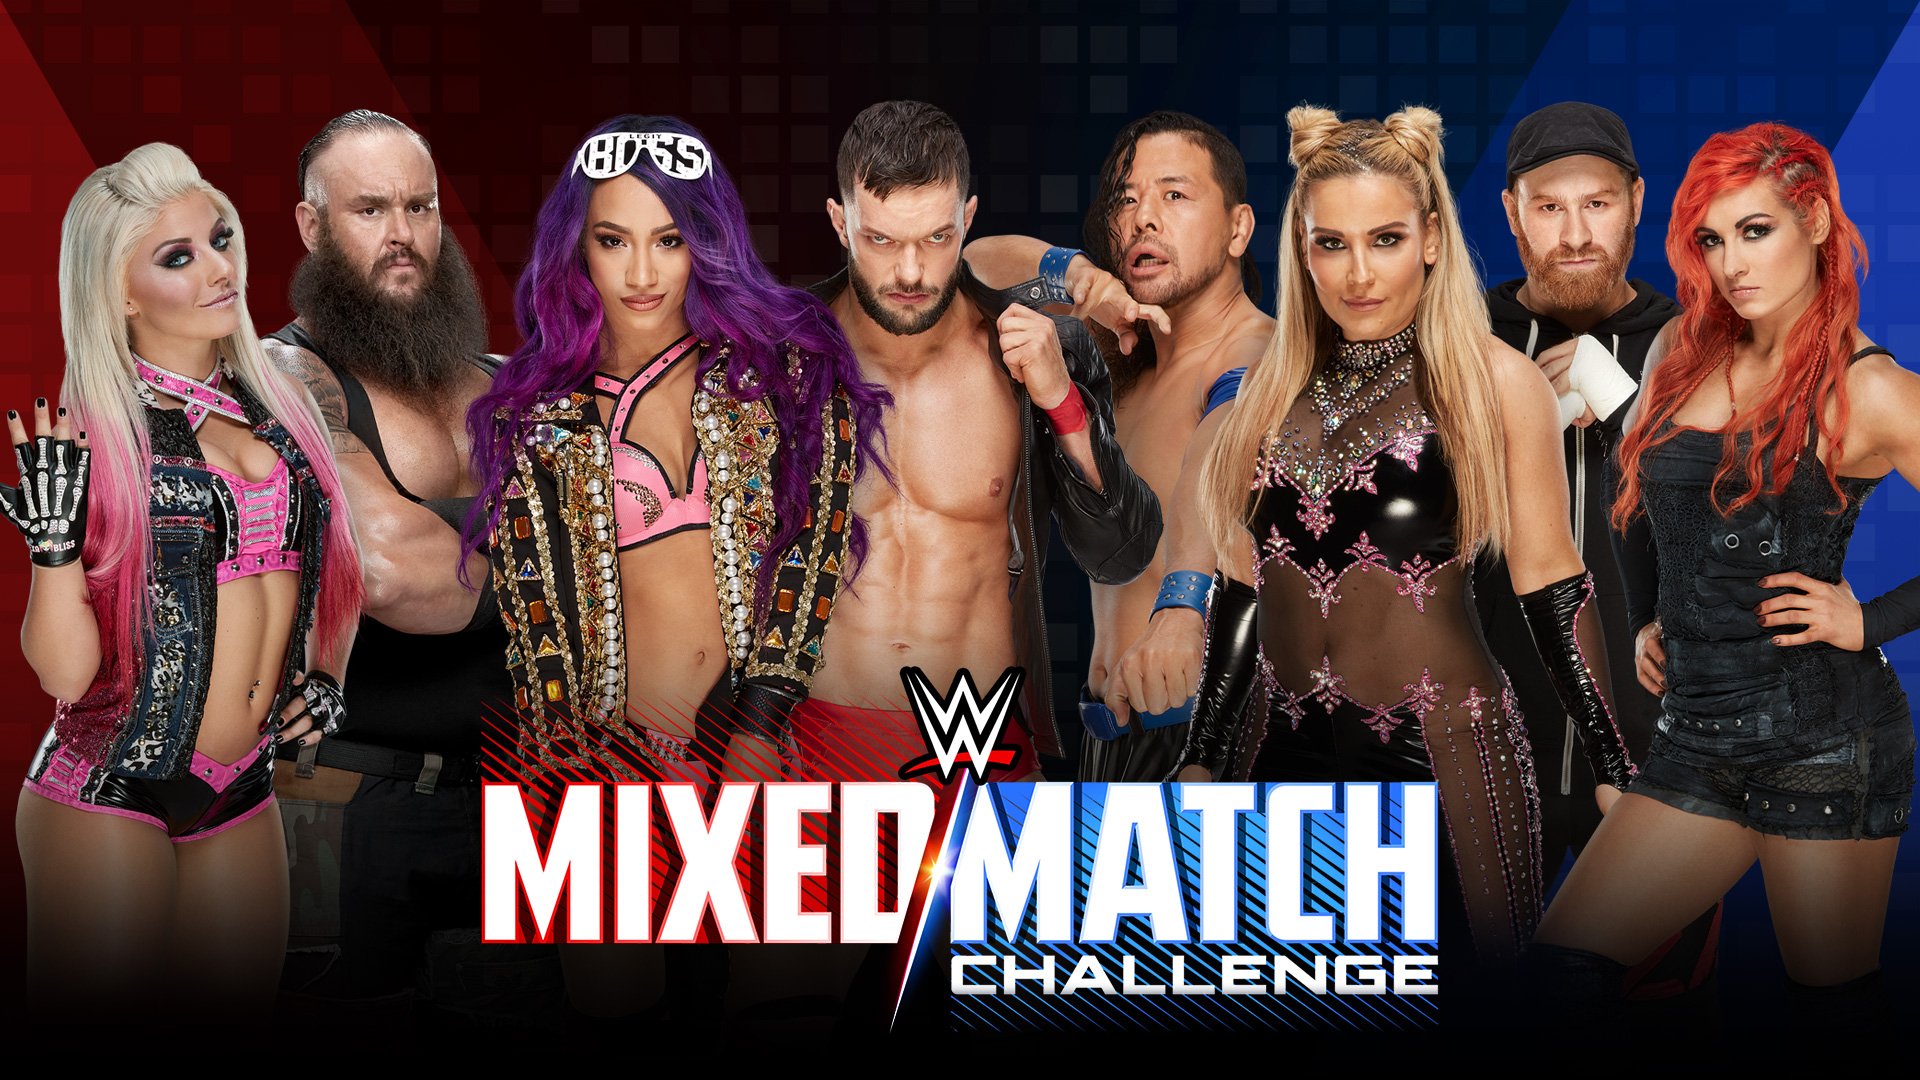 WWE Mixed Match Challenge Results: Rusev & Lana vs Elias & Bayley